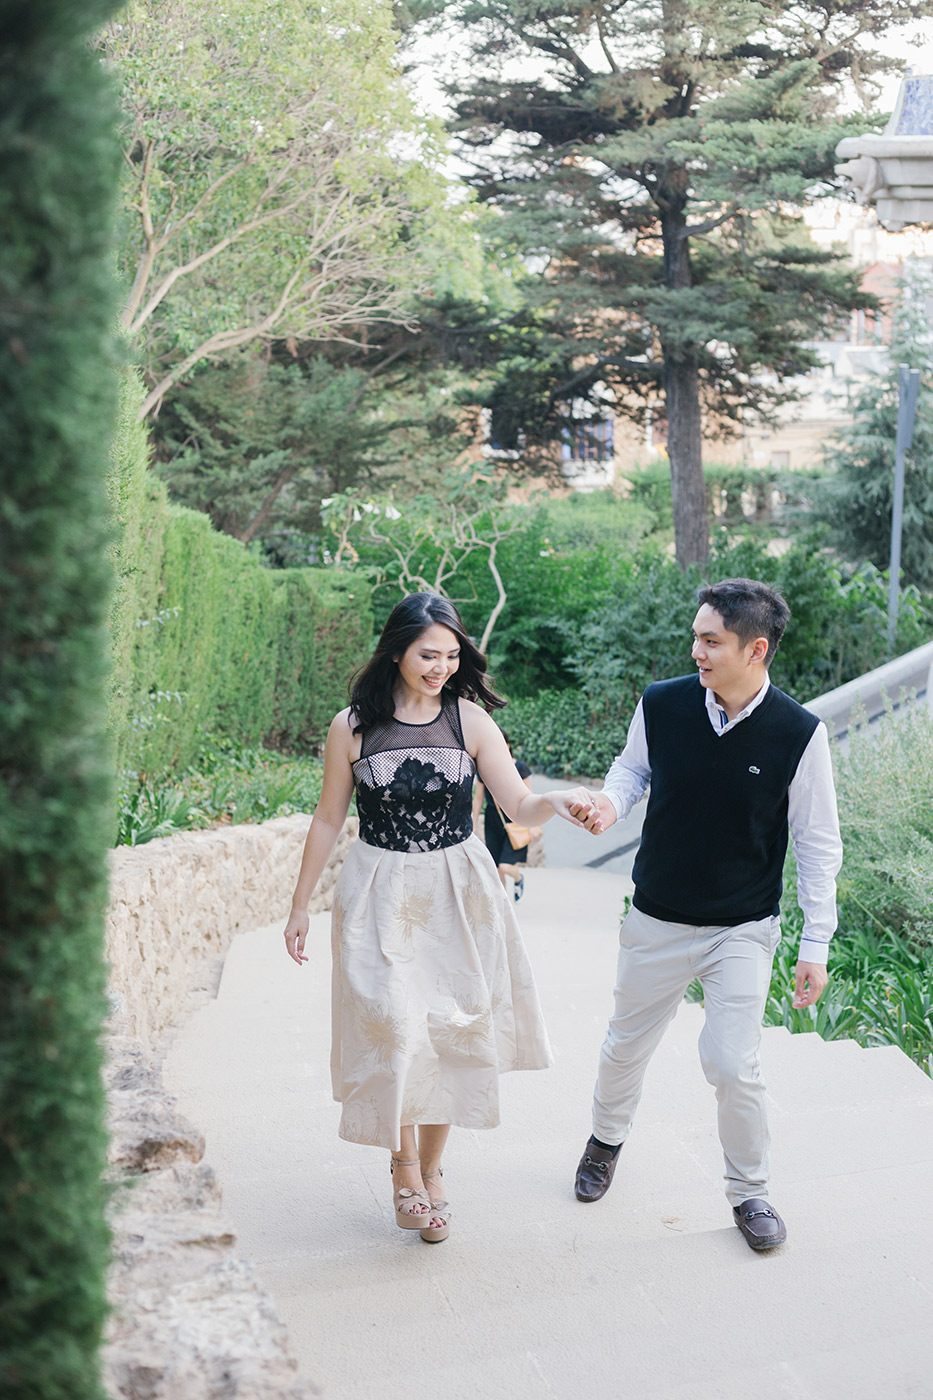 Romantic Engagement | Engagement Photographer Barcelona | Fine Art Photographer | Elegant pre wedding photoshoot Barcelona